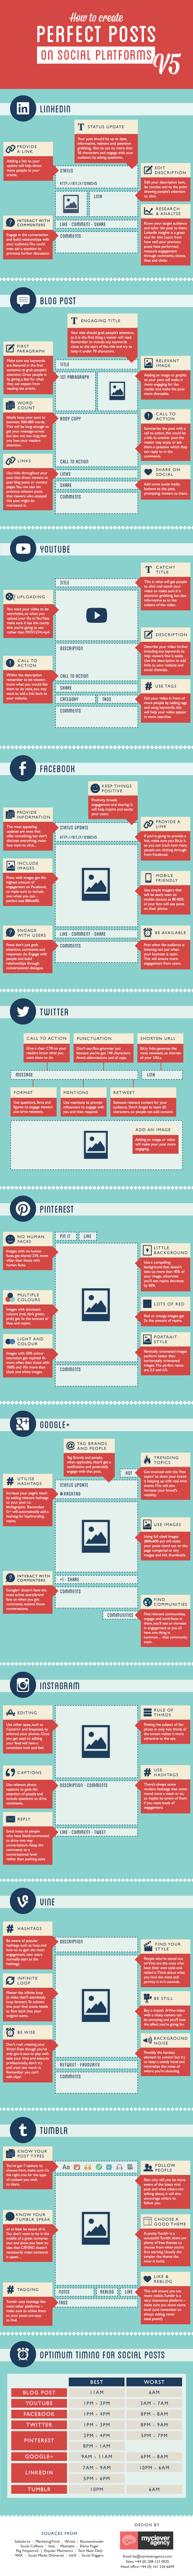 hoe-maak-je-de-perfecte-social-media-post-Infographic